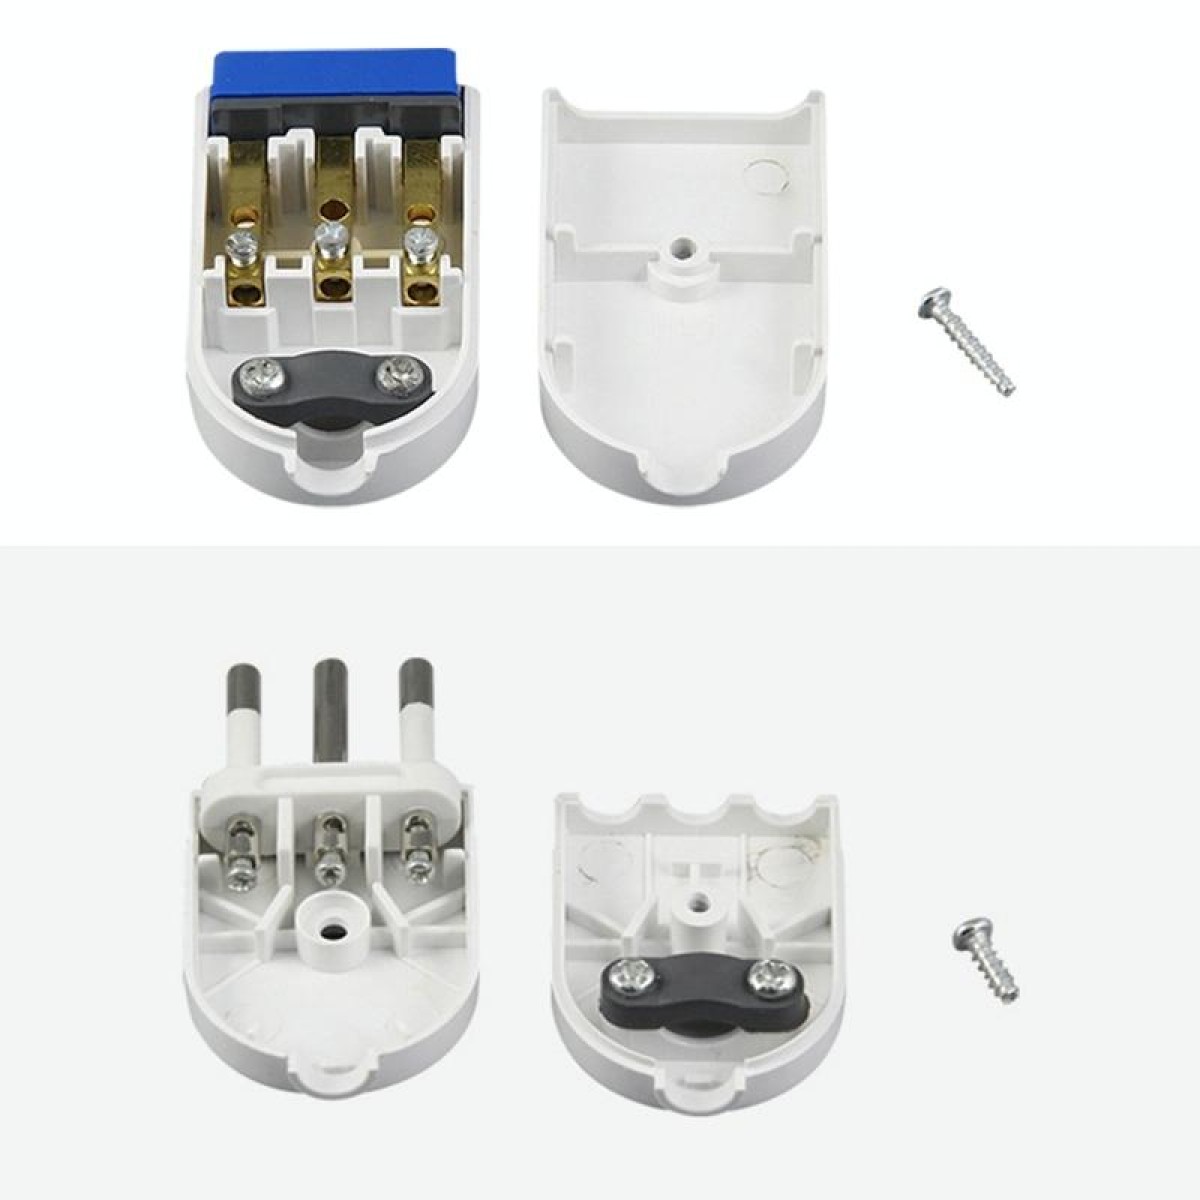 Italian Standard Three Round Pin Detachable Male Plug + 3-hole Female Socket